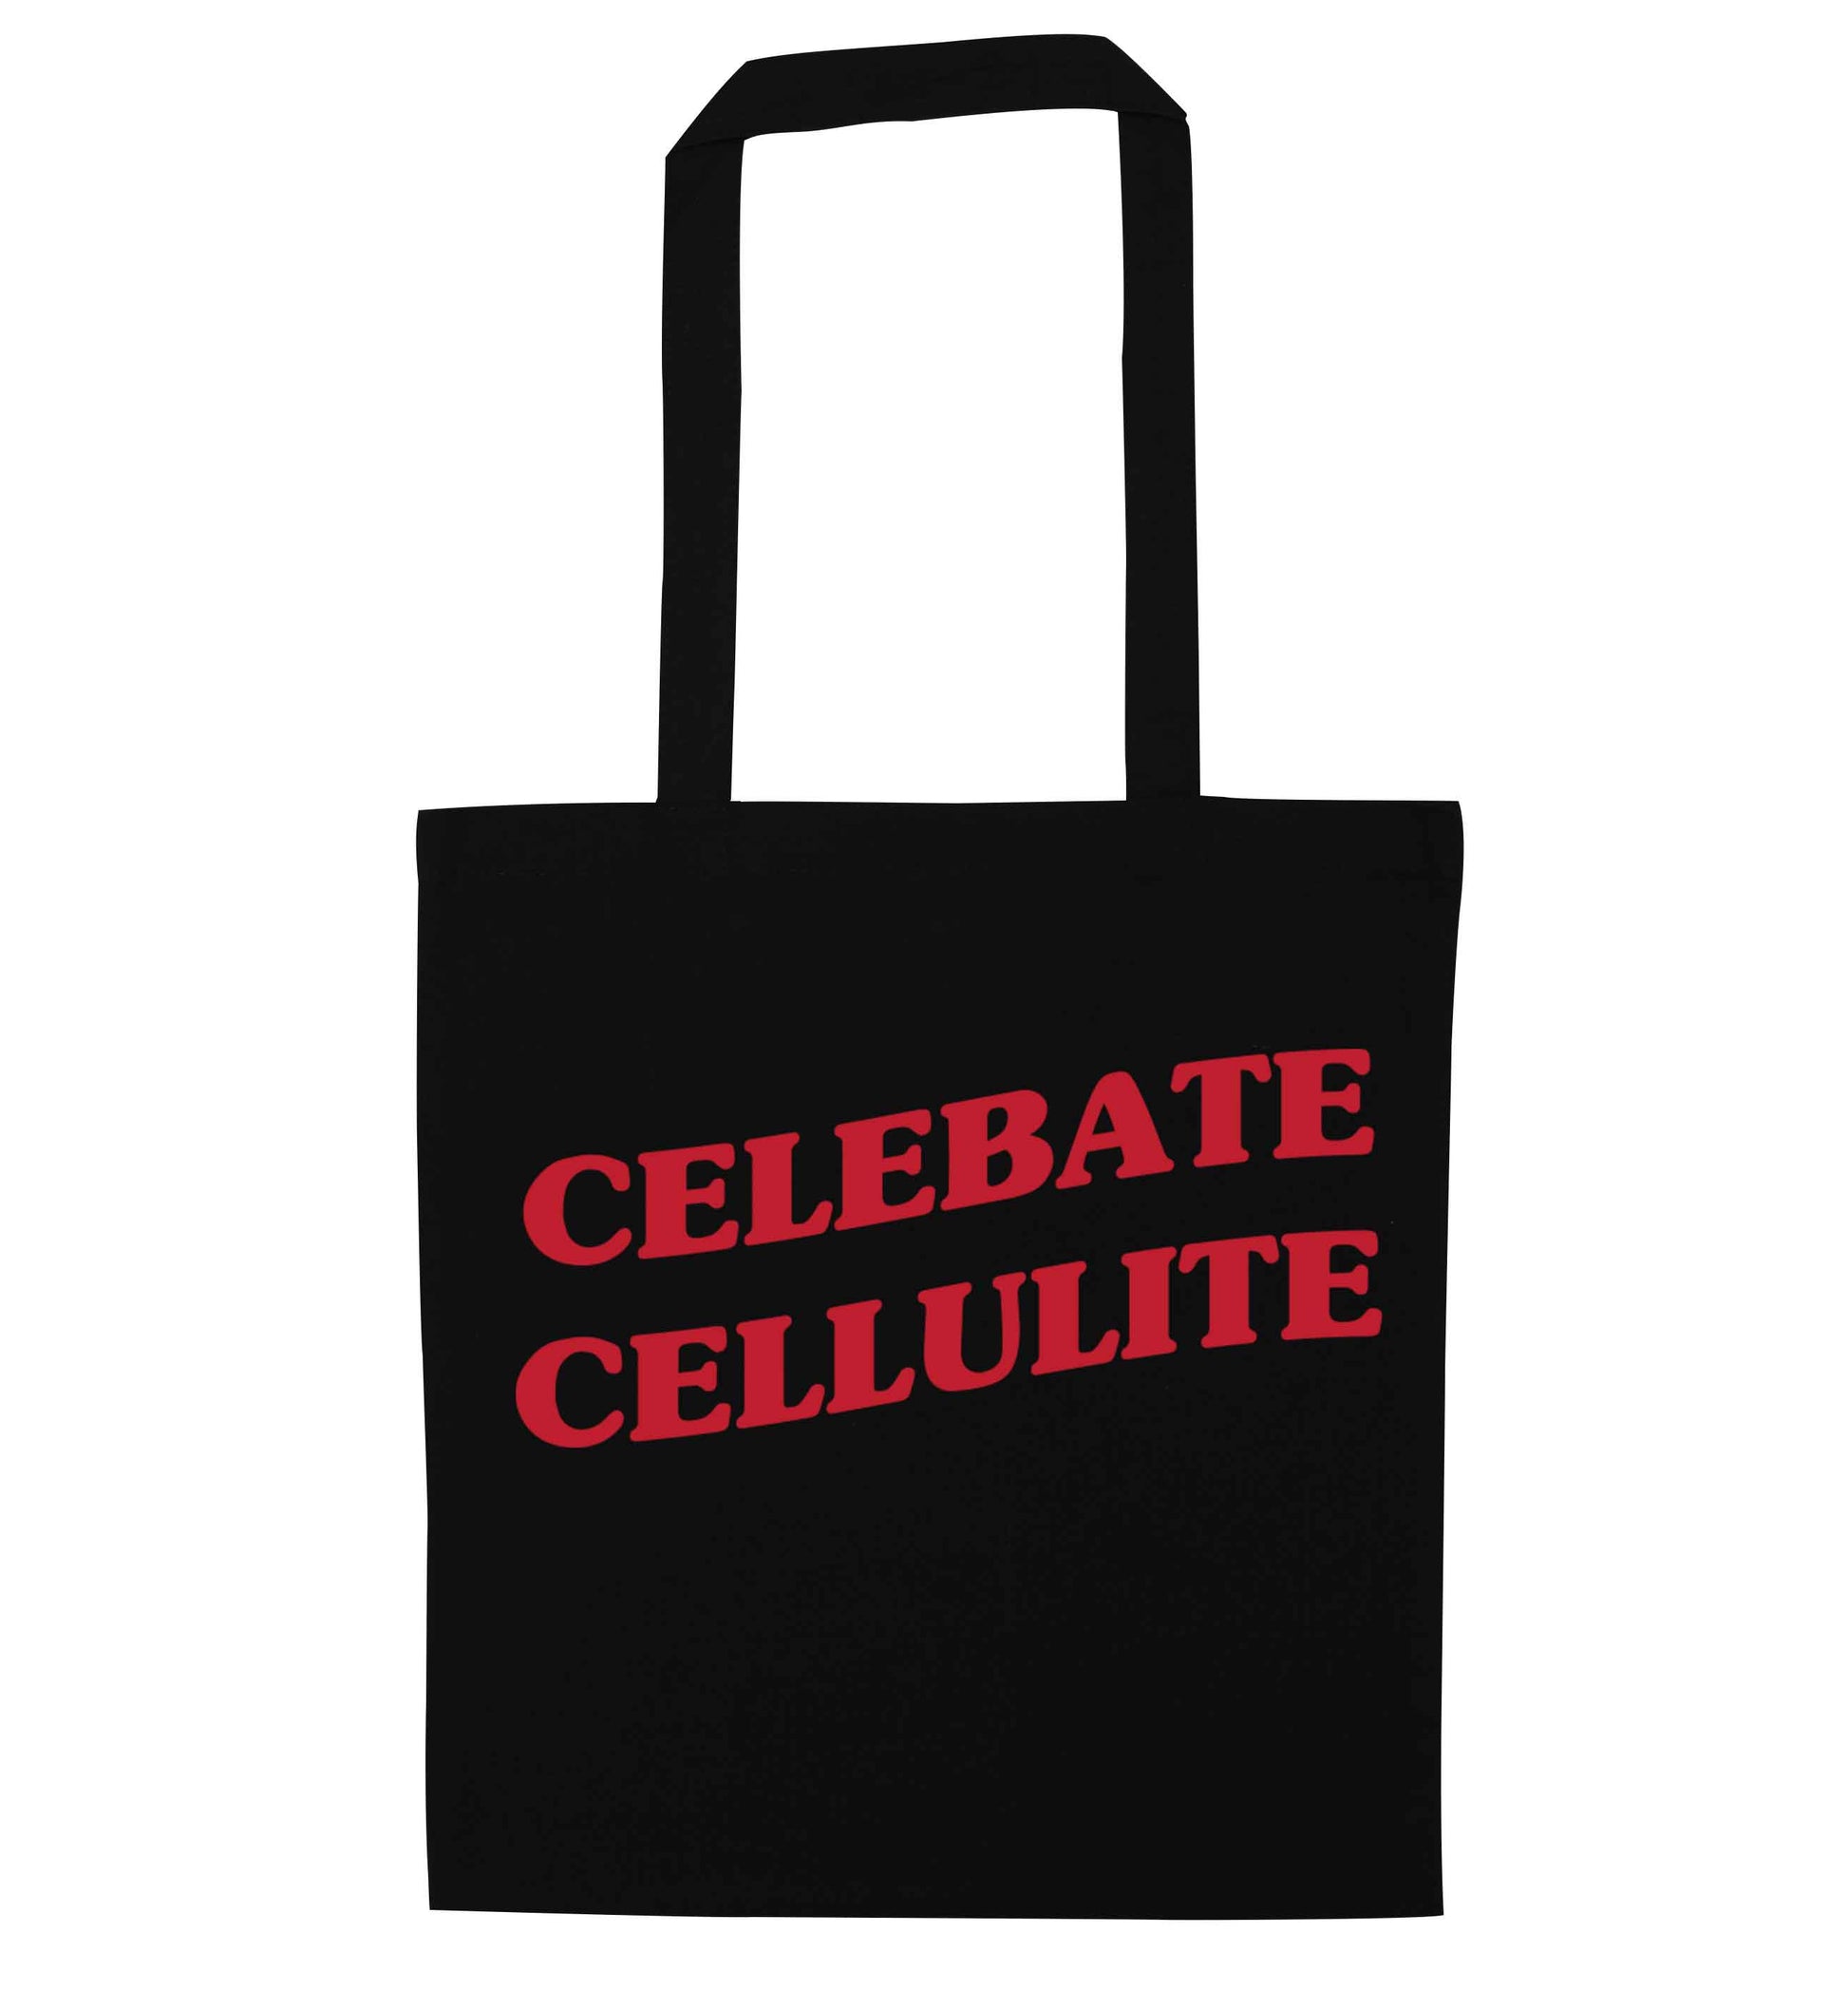 Celebrate cellulite black tote bag